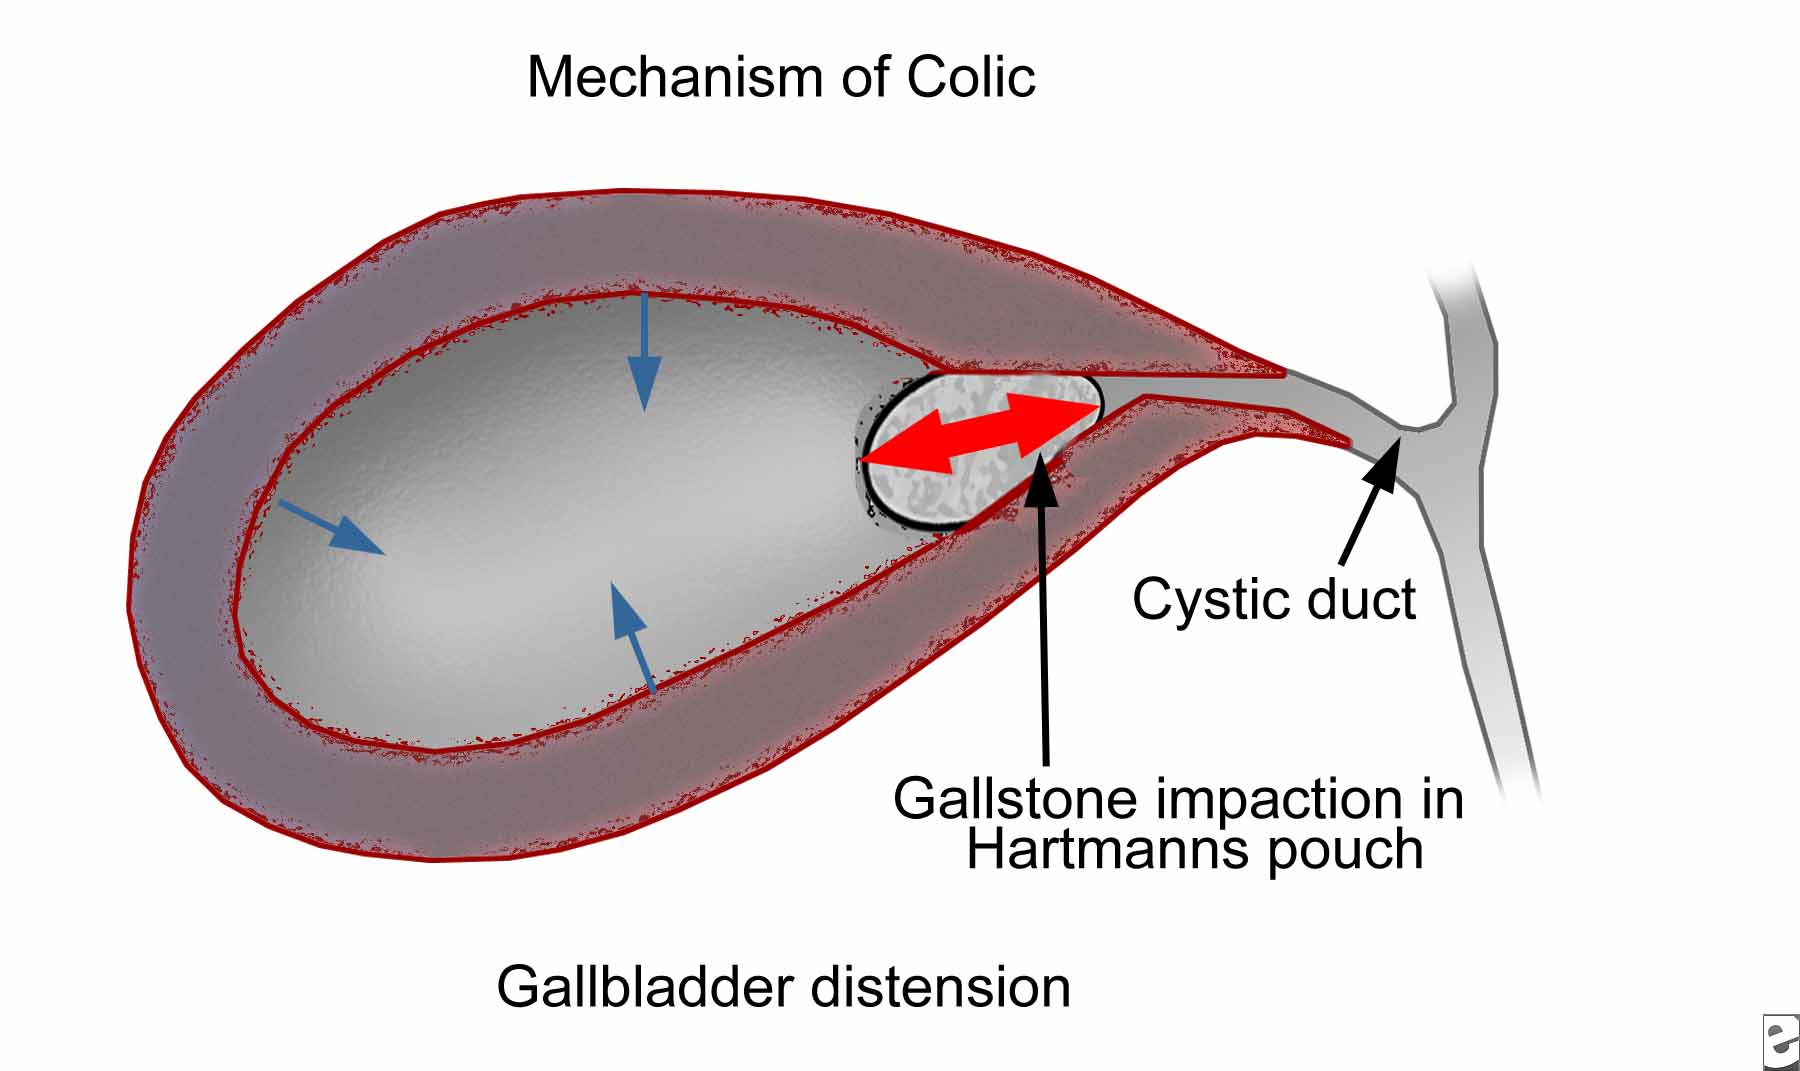 Mechanism and anatomy of billiard colic (source) 